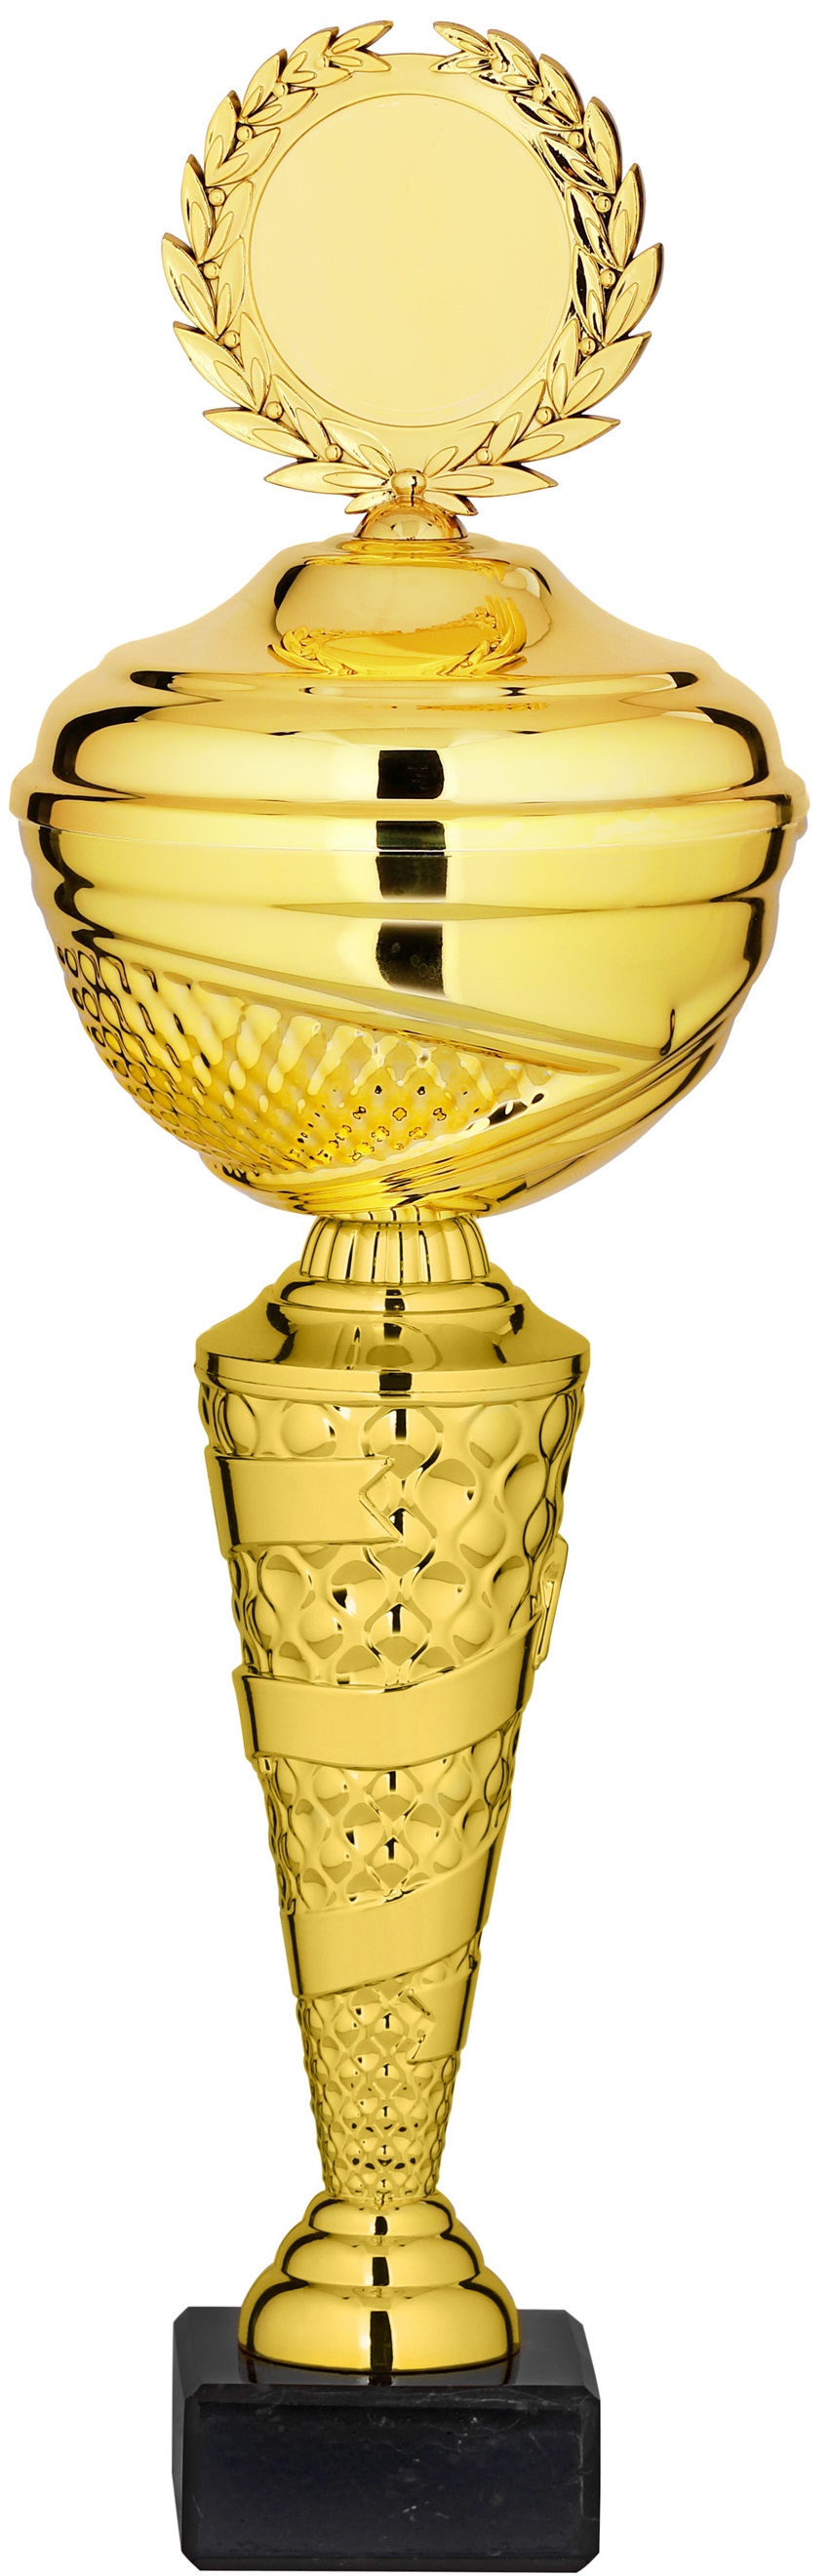 Pokal P600-Gold  inkl. Gravur und Emblem 48,0 cm